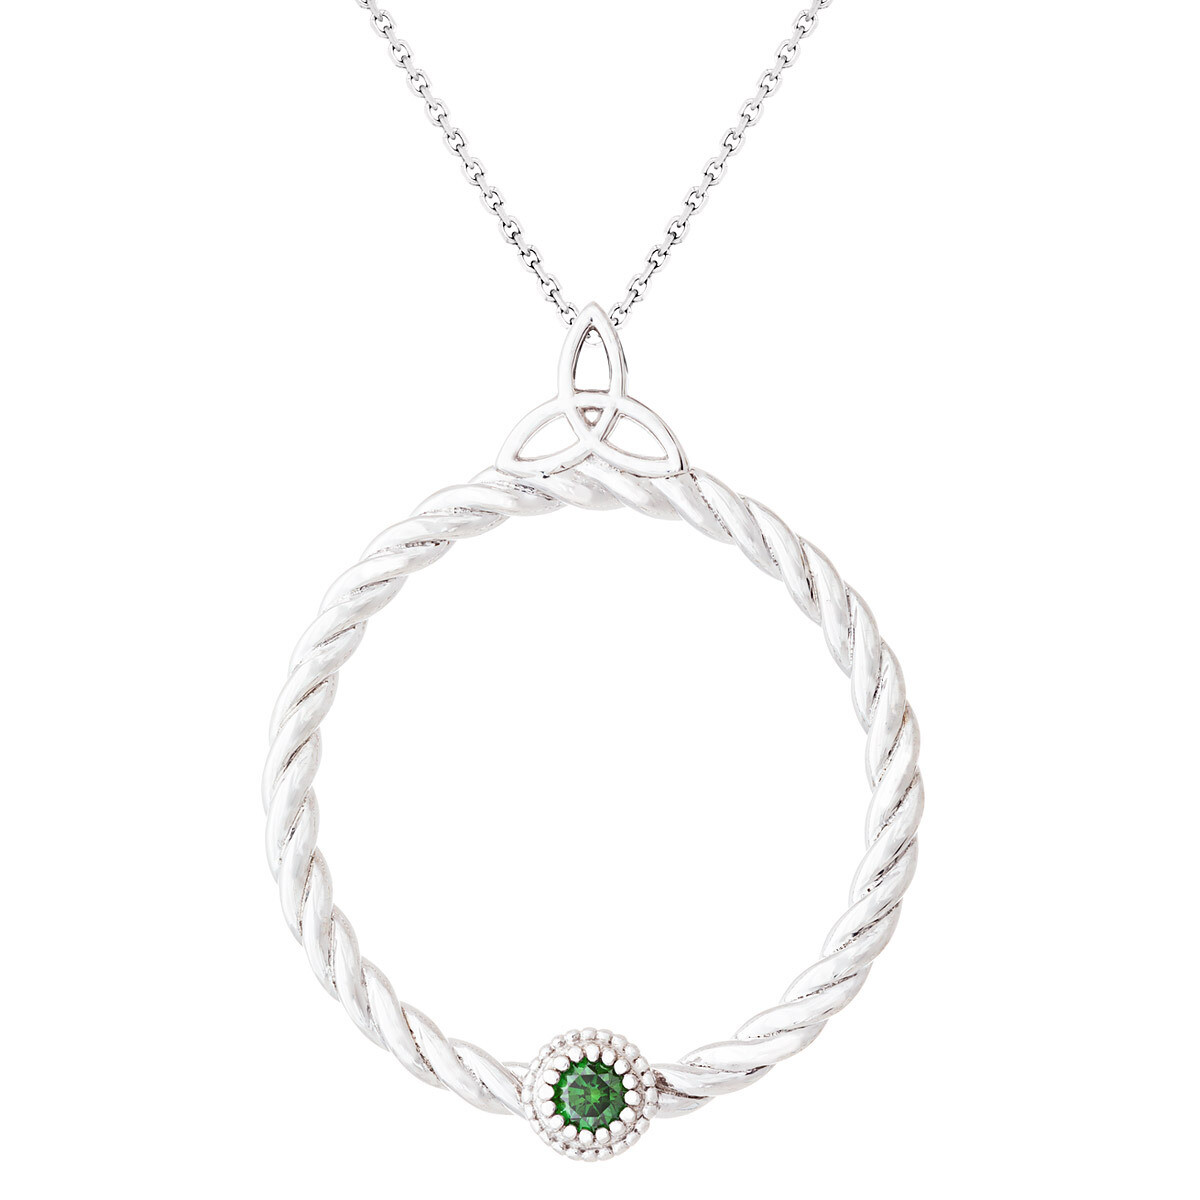 CC Celtic Braid©—Silver w/ Green Diamond